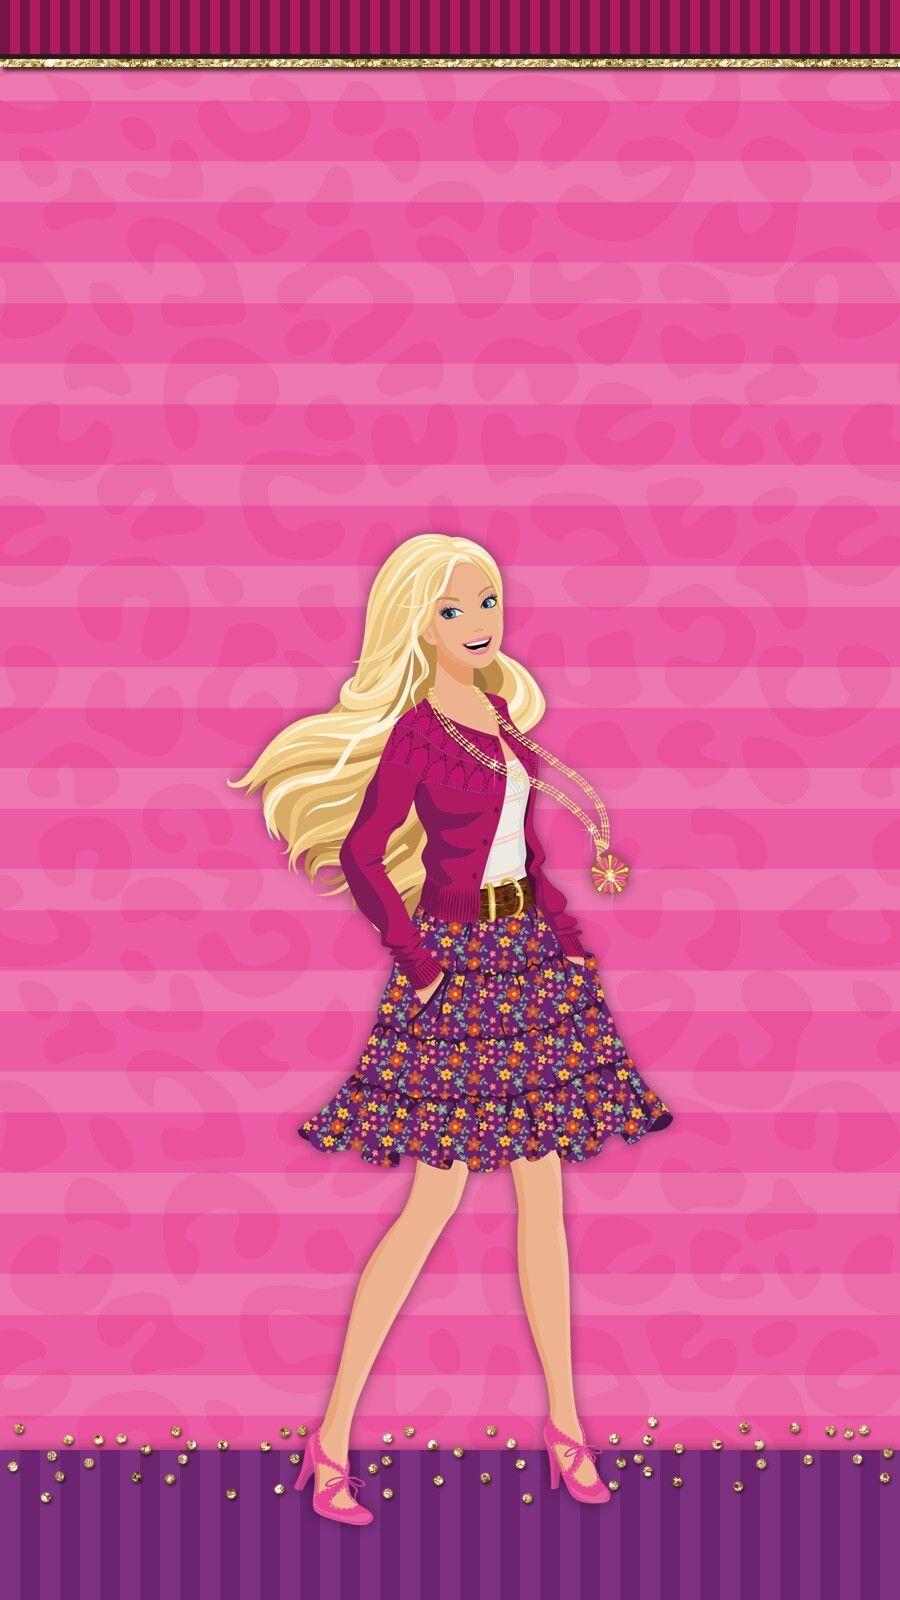 búp bê barbie and the Secret Door các hình nền  phim búp bê barbie hình nền  37519217  fanpop